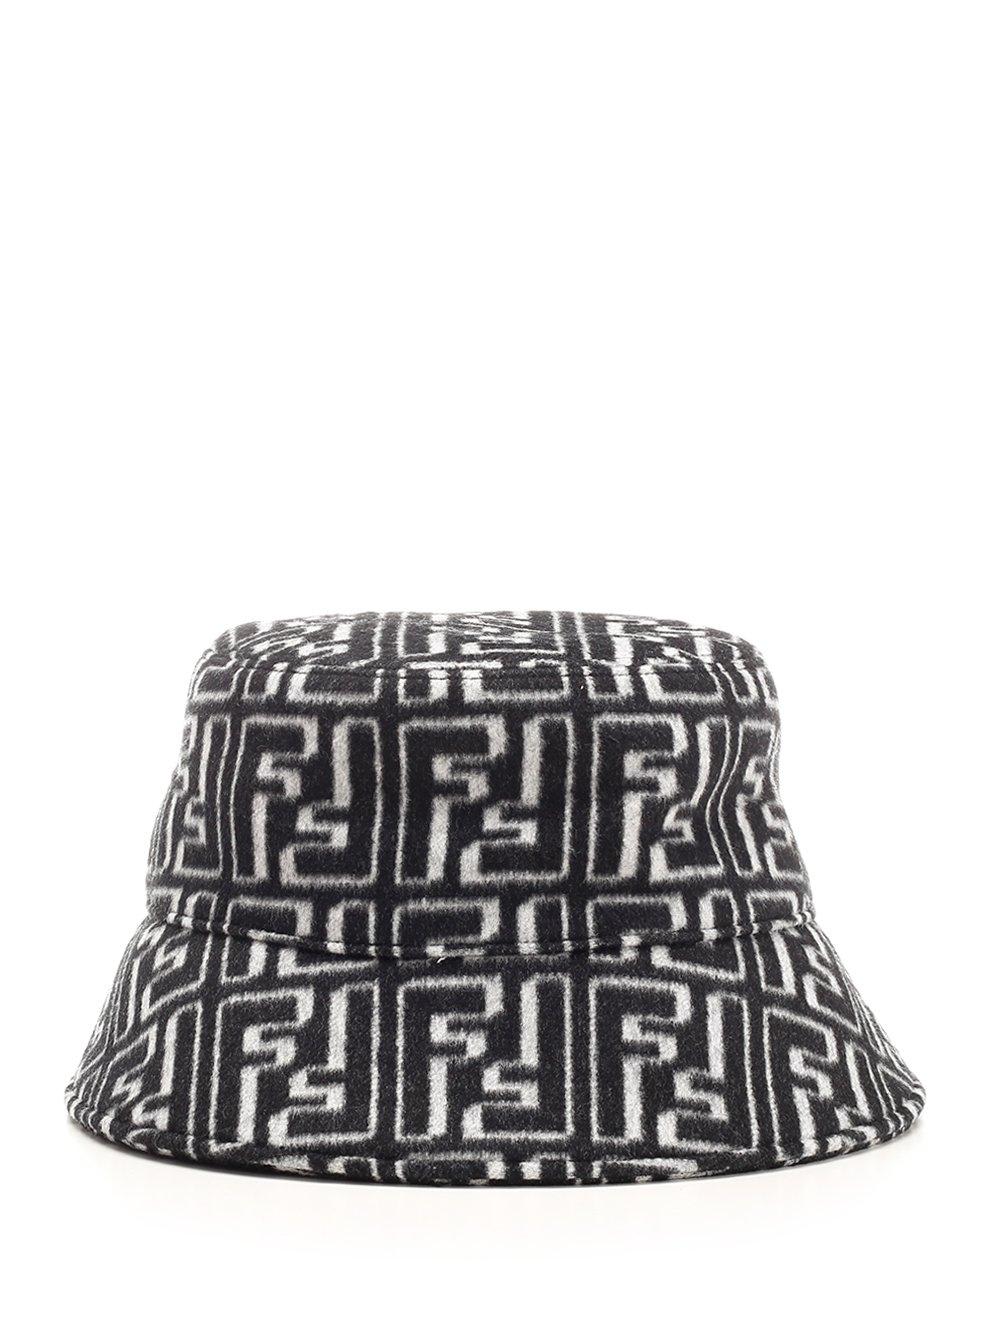 Fendi Monogram Jacquard Bucket Hat